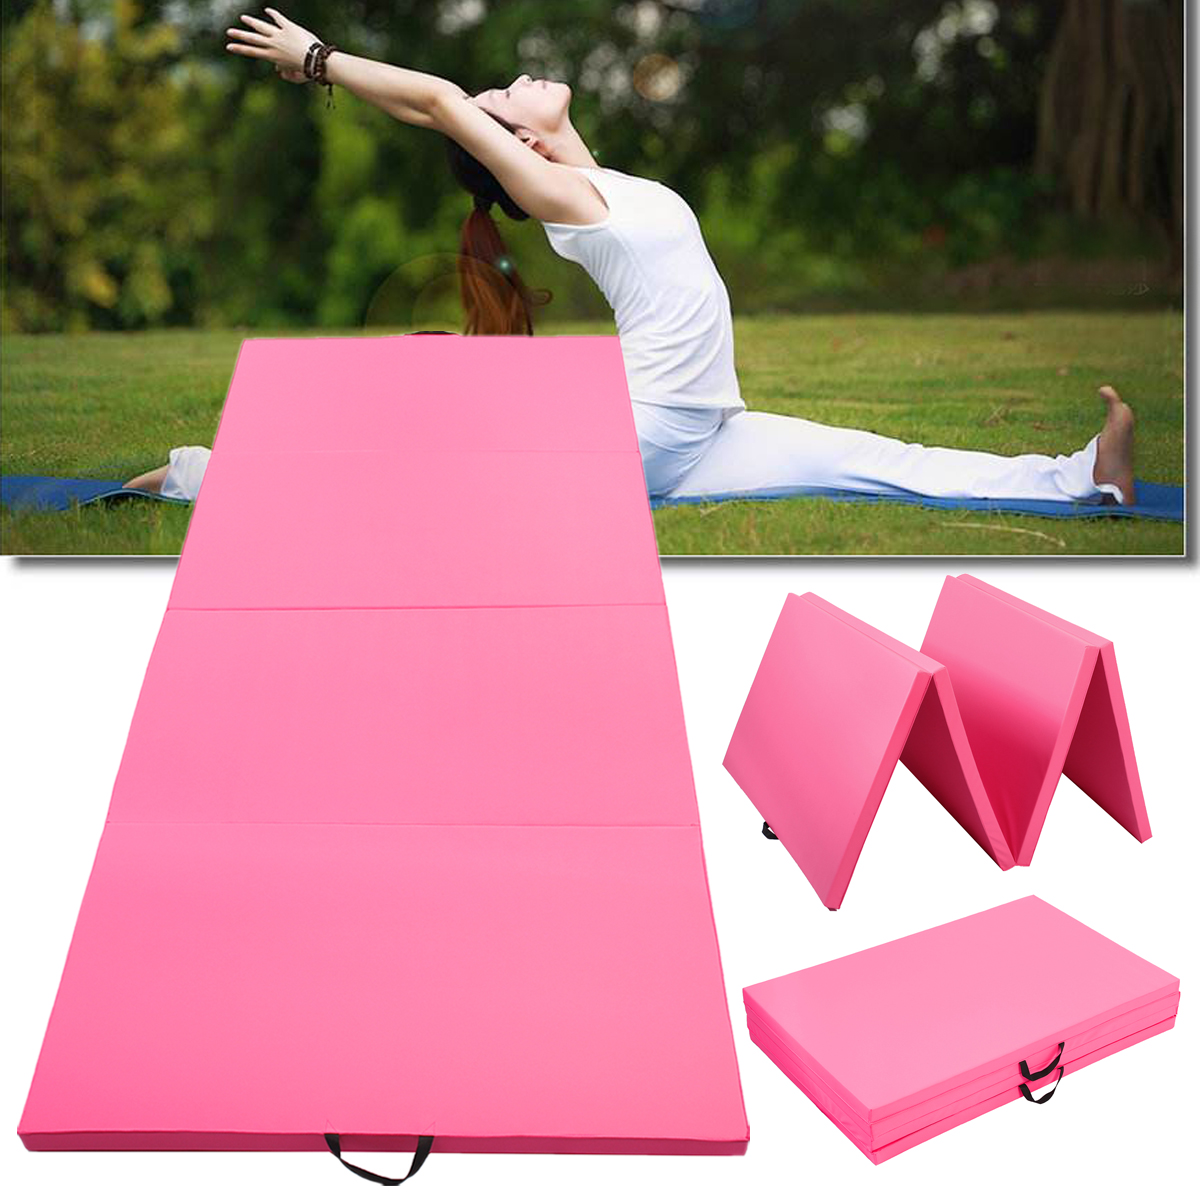 118x47x196inch-4-Folding-Super-Large-Gymnastics-Mat-Yoga-Gym-Exercise-Pad-Pink-1246274-1